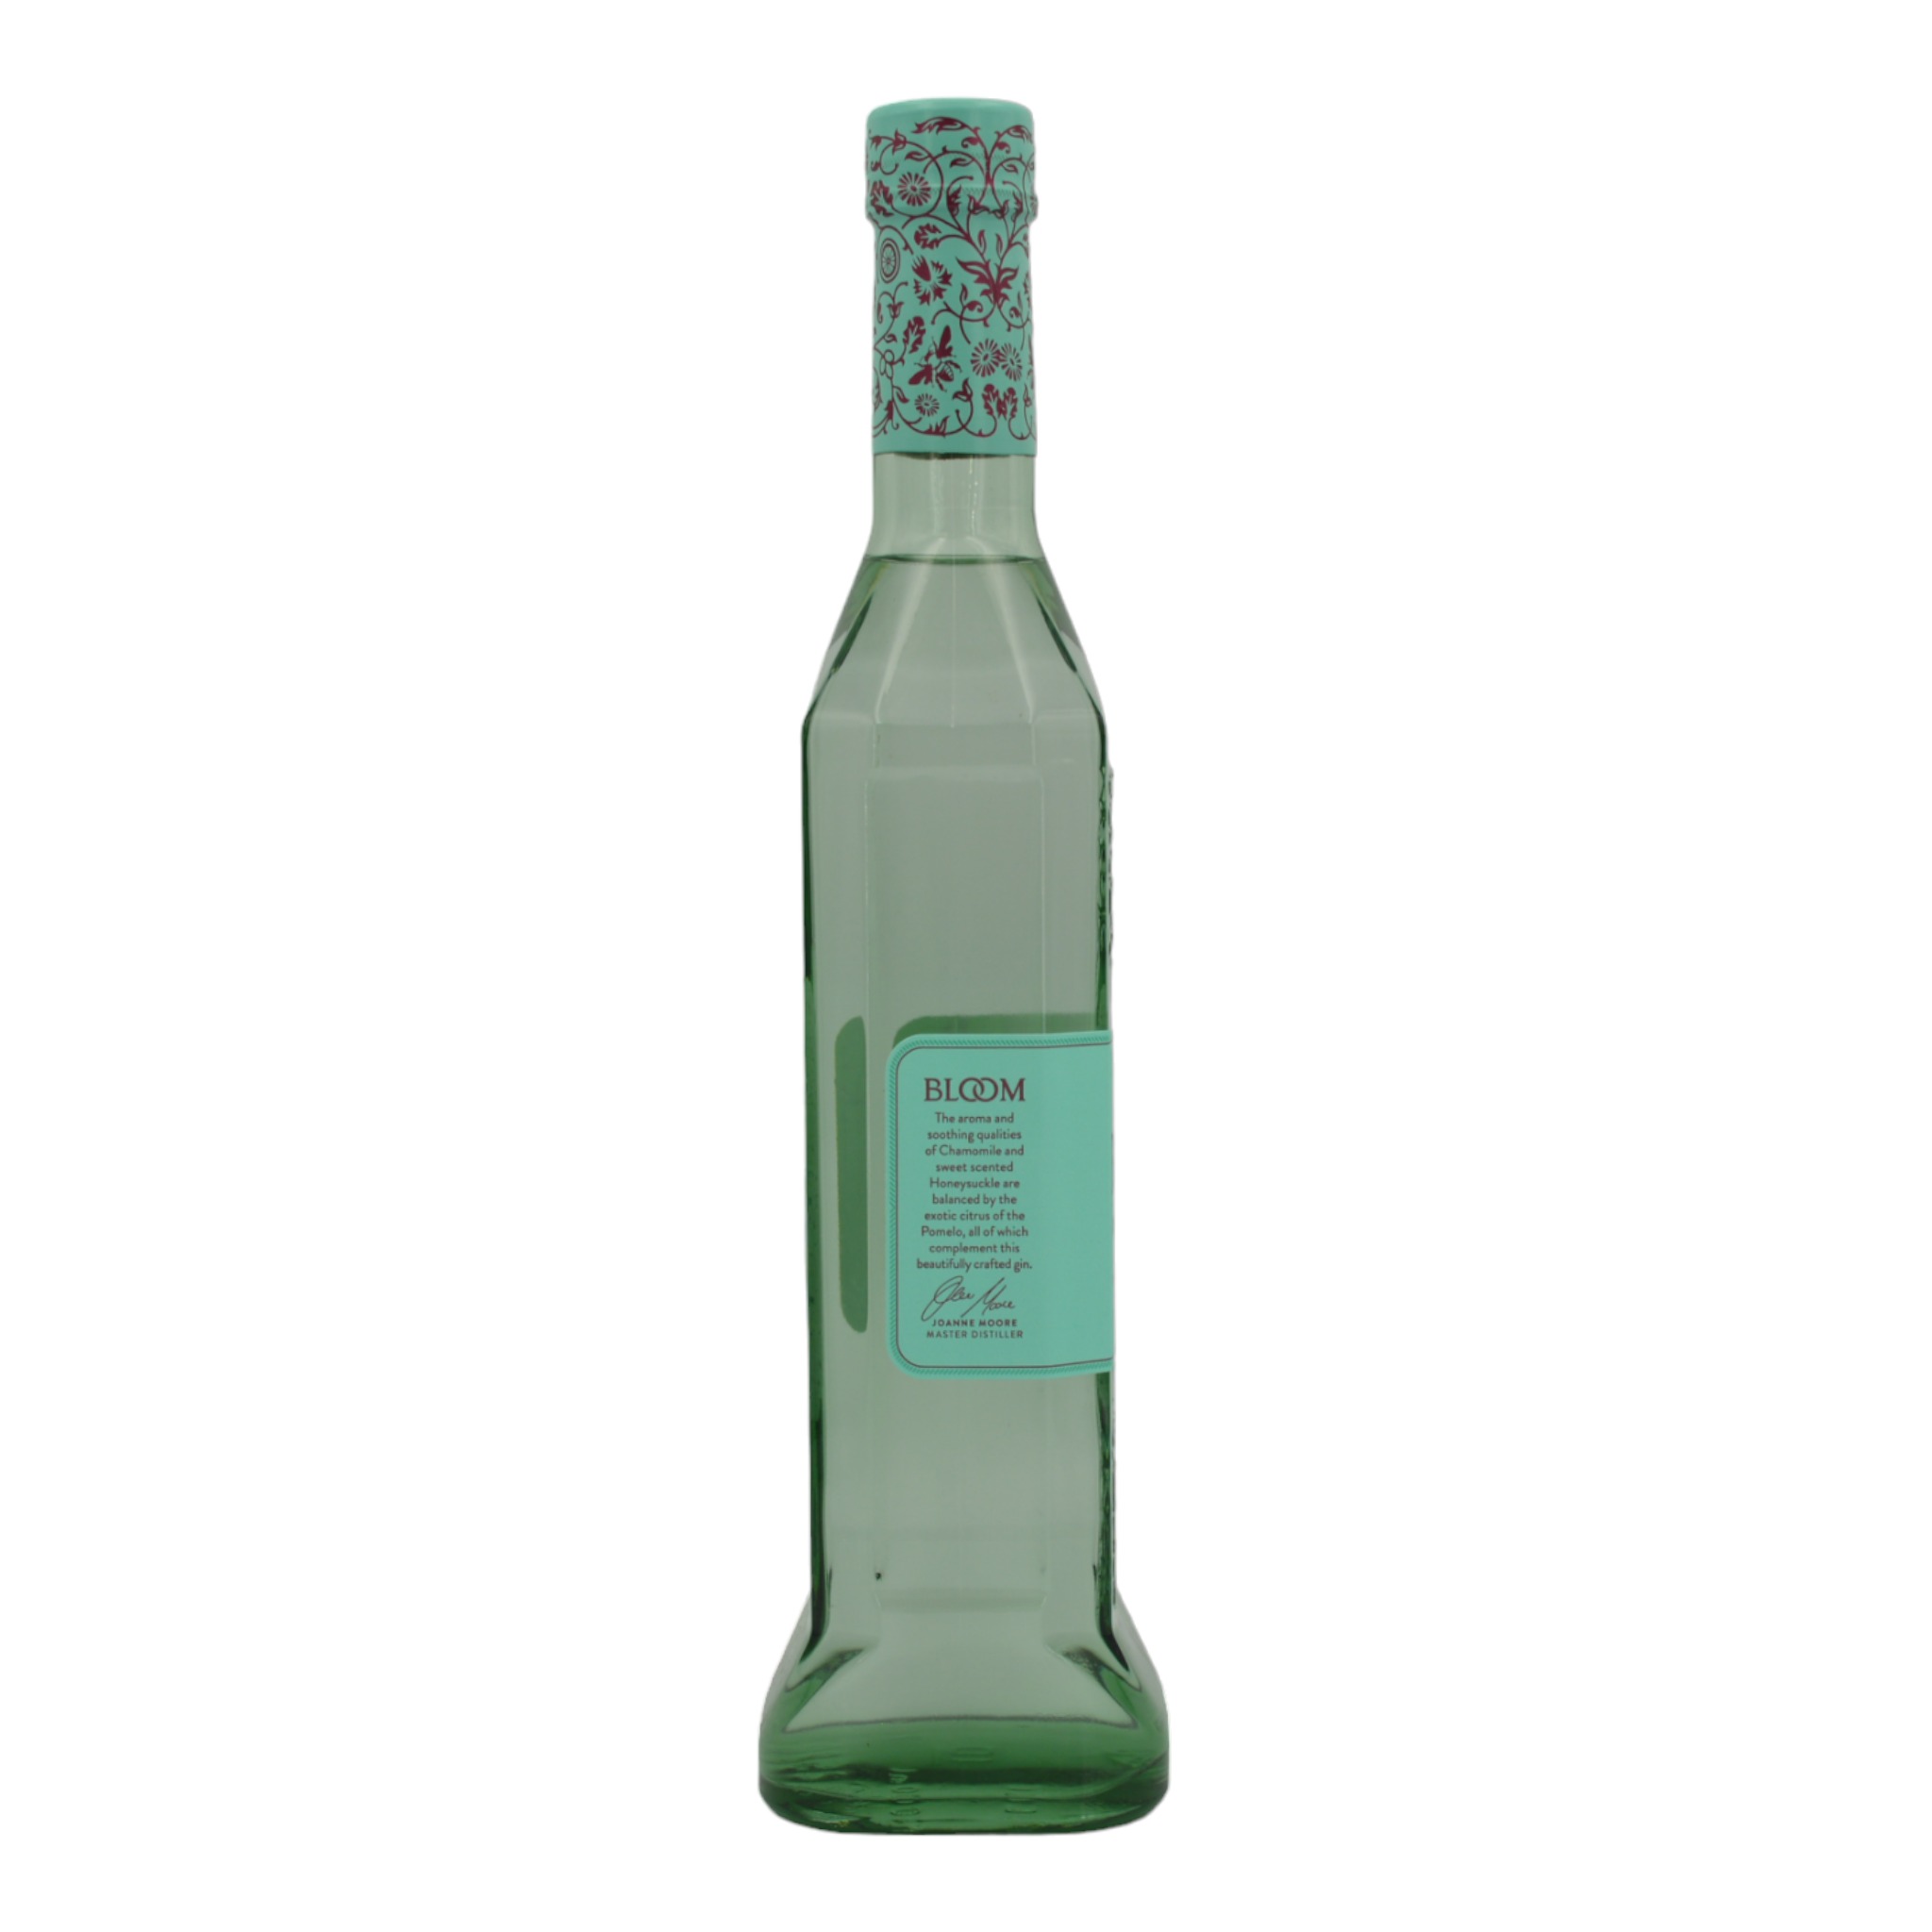 5010296169249Bloom London Dry Gin s1 - Weinhaus-Buecker